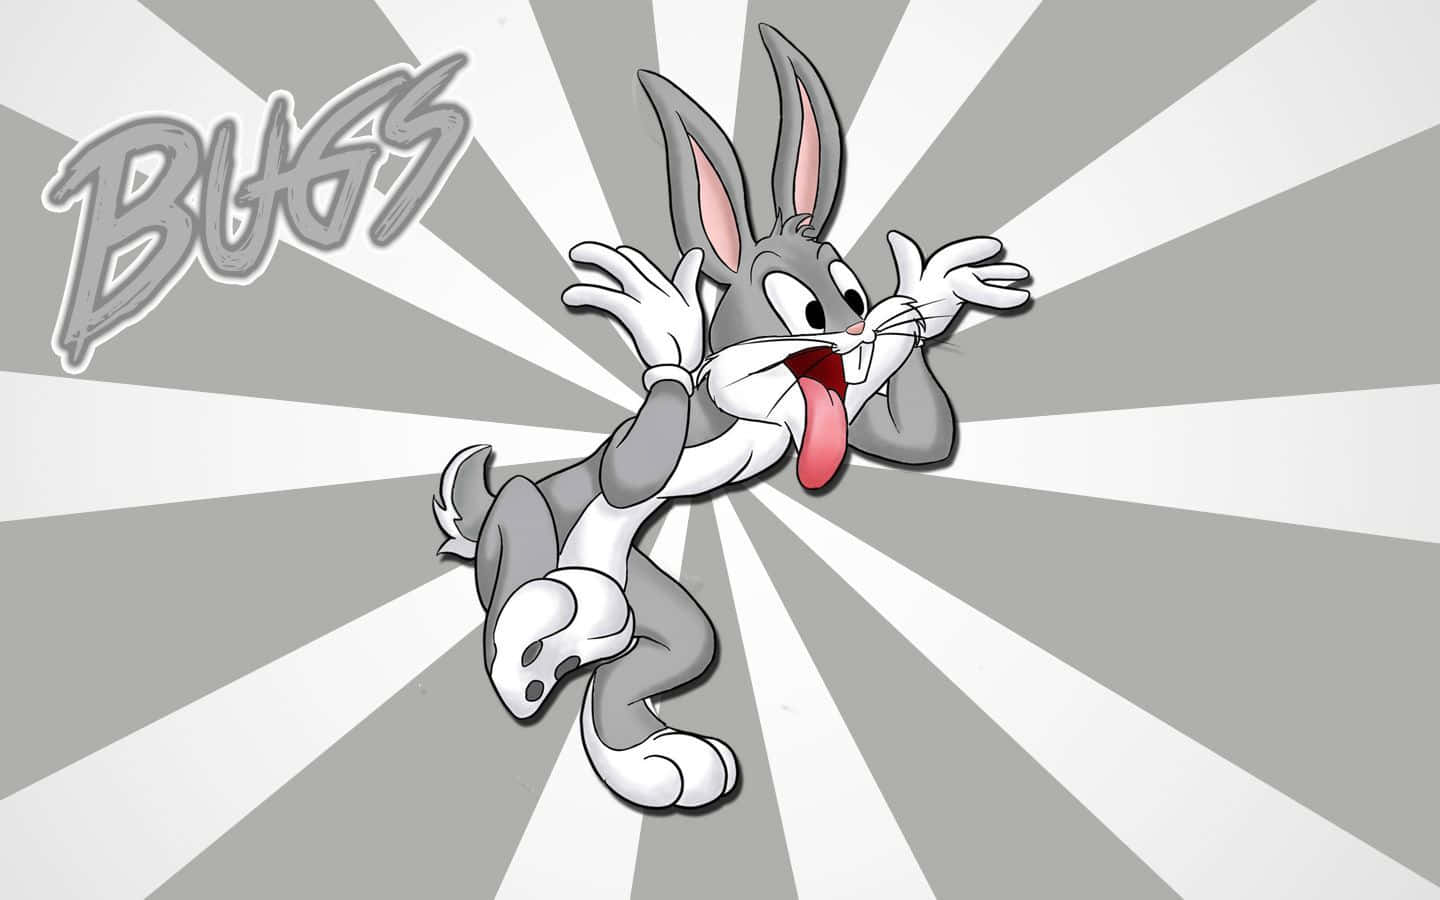 Snyggbugs Bunny Med Tunga Ut. Wallpaper